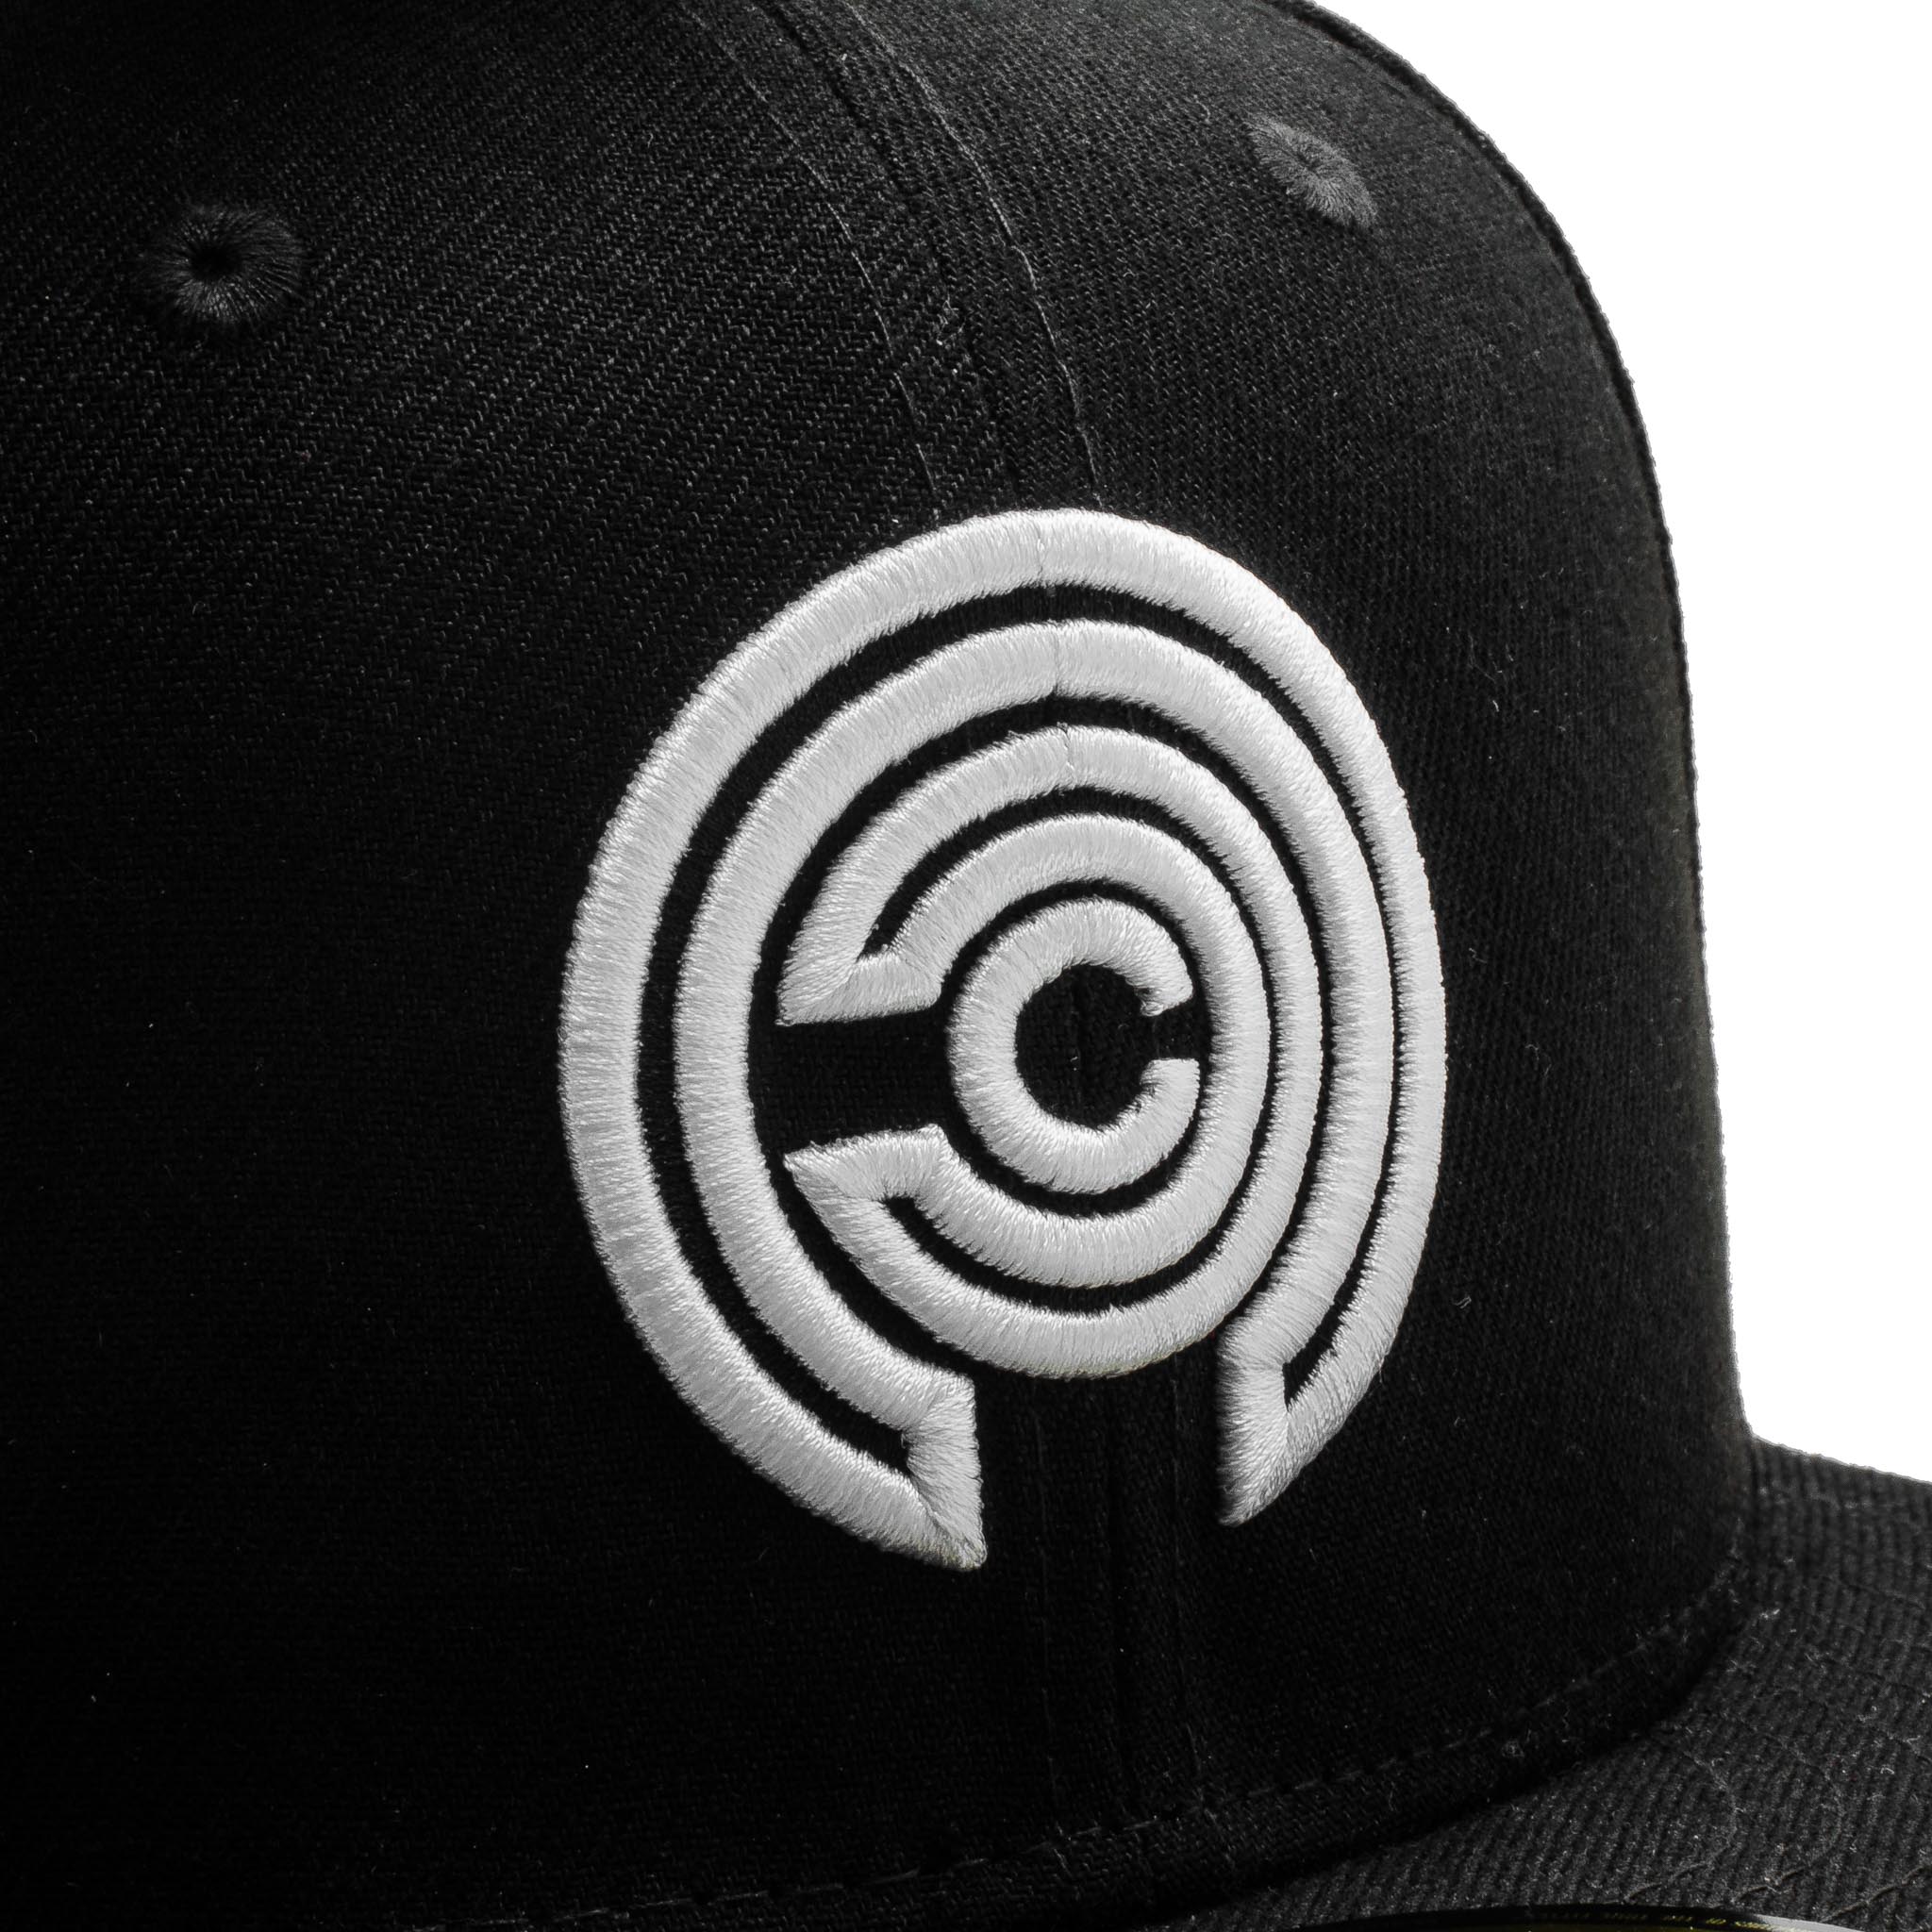 ShinShops x New Era OG Logo houndstooth-pattern cap Black